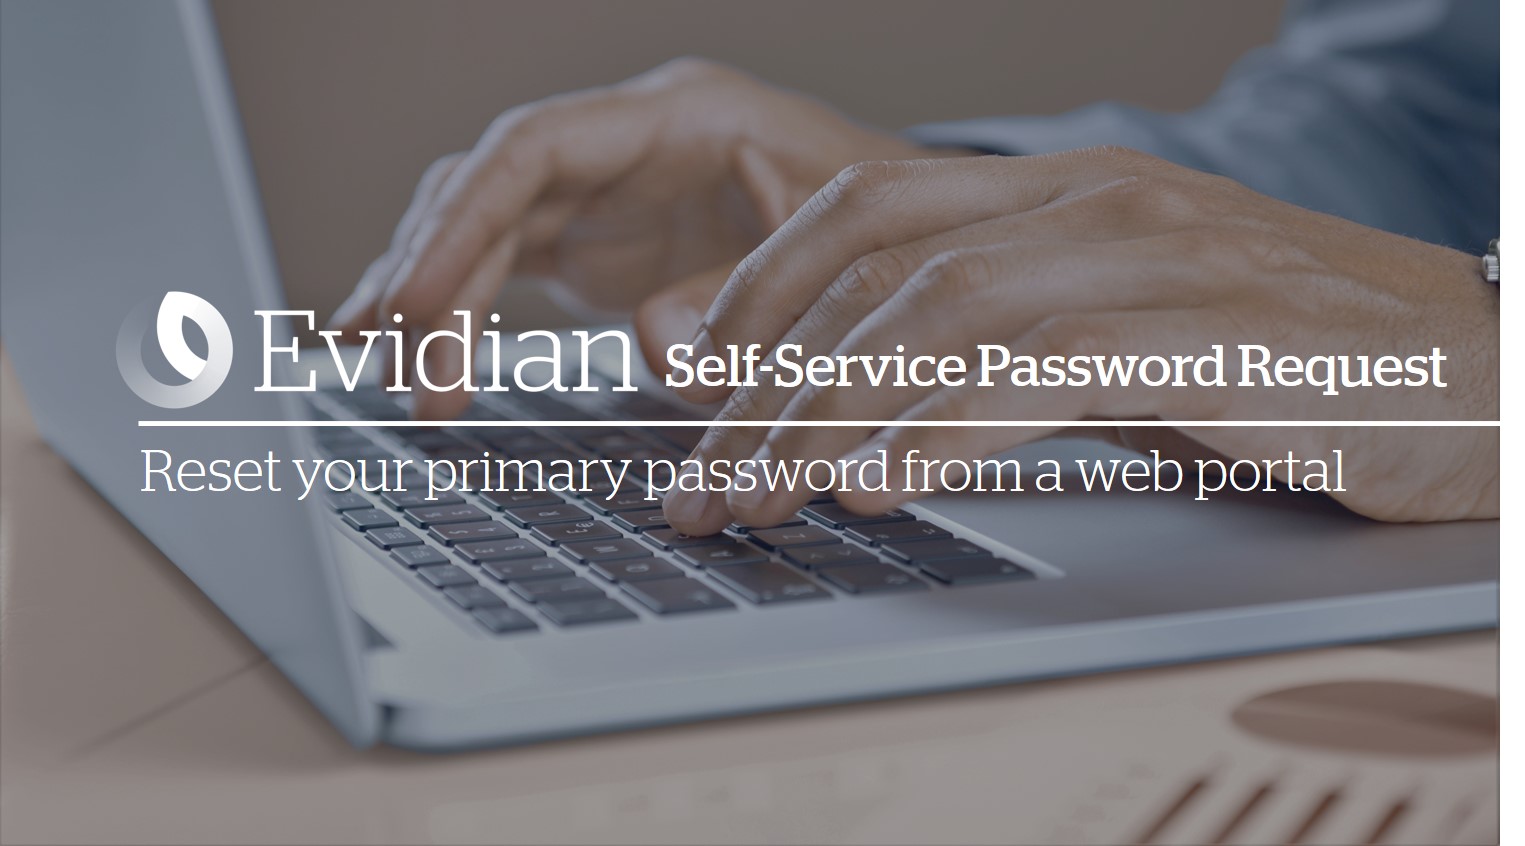 Password reset portal for SSPR (Self-Service Password Reset)